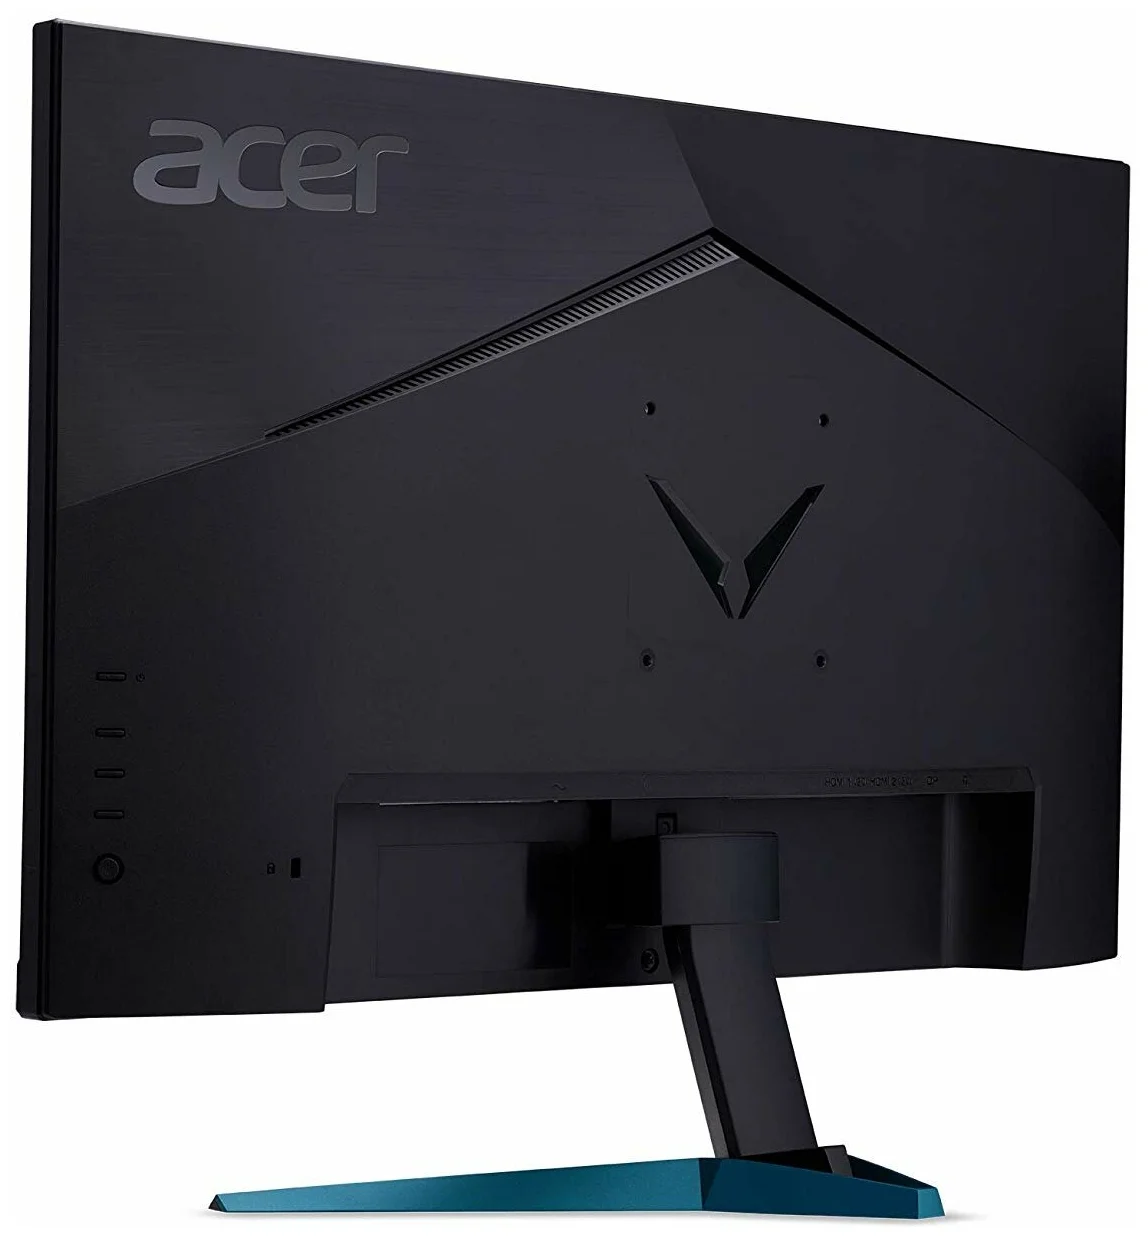 27" Acer Nitro VG270UPbmiipx, 2560x1440, 144 Гц, IPS - игровой монитор: да